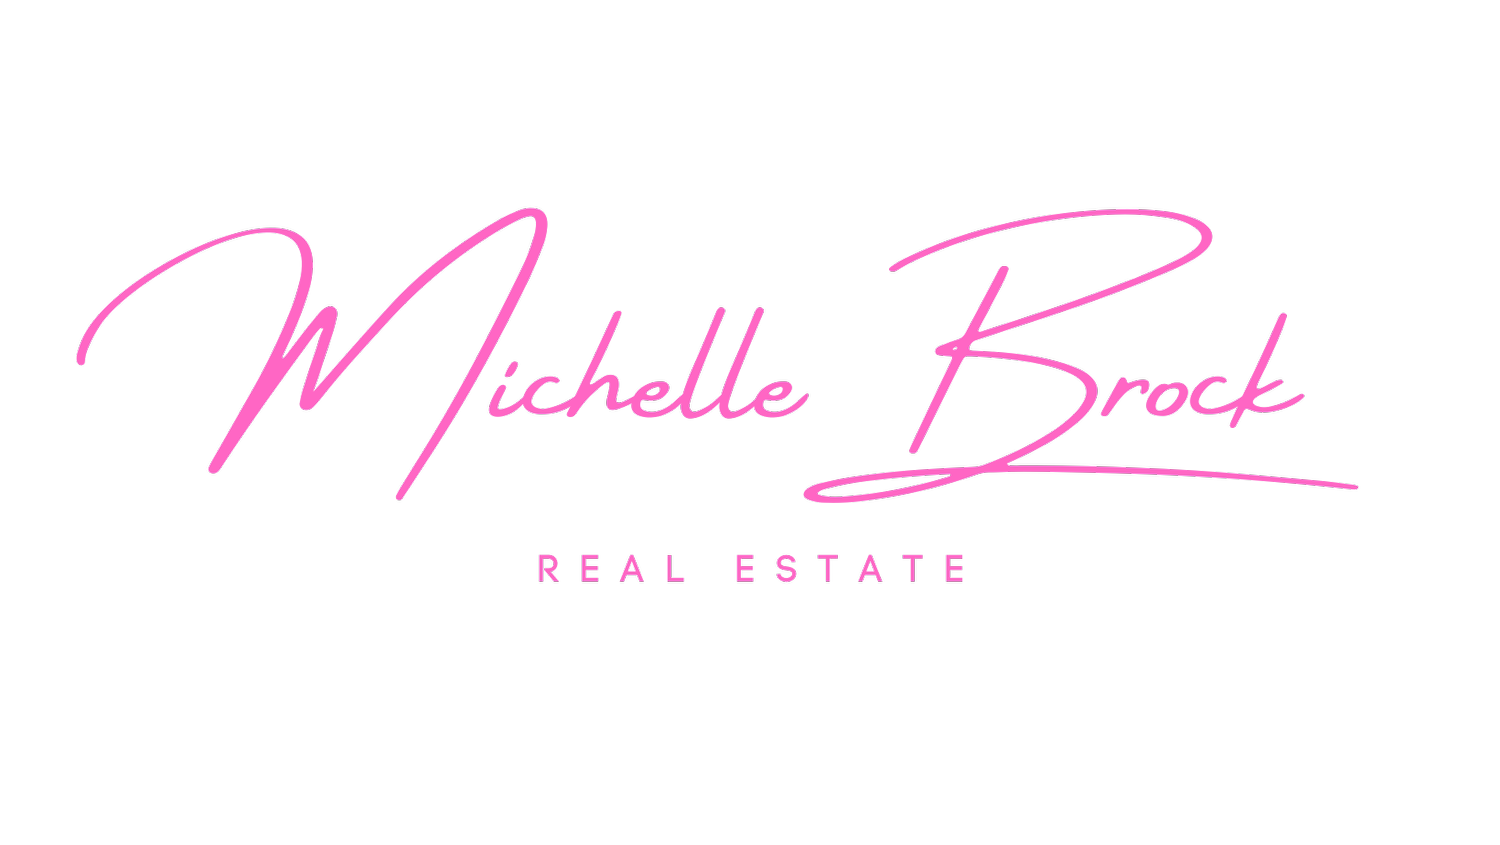 Michelle Brock Realtor